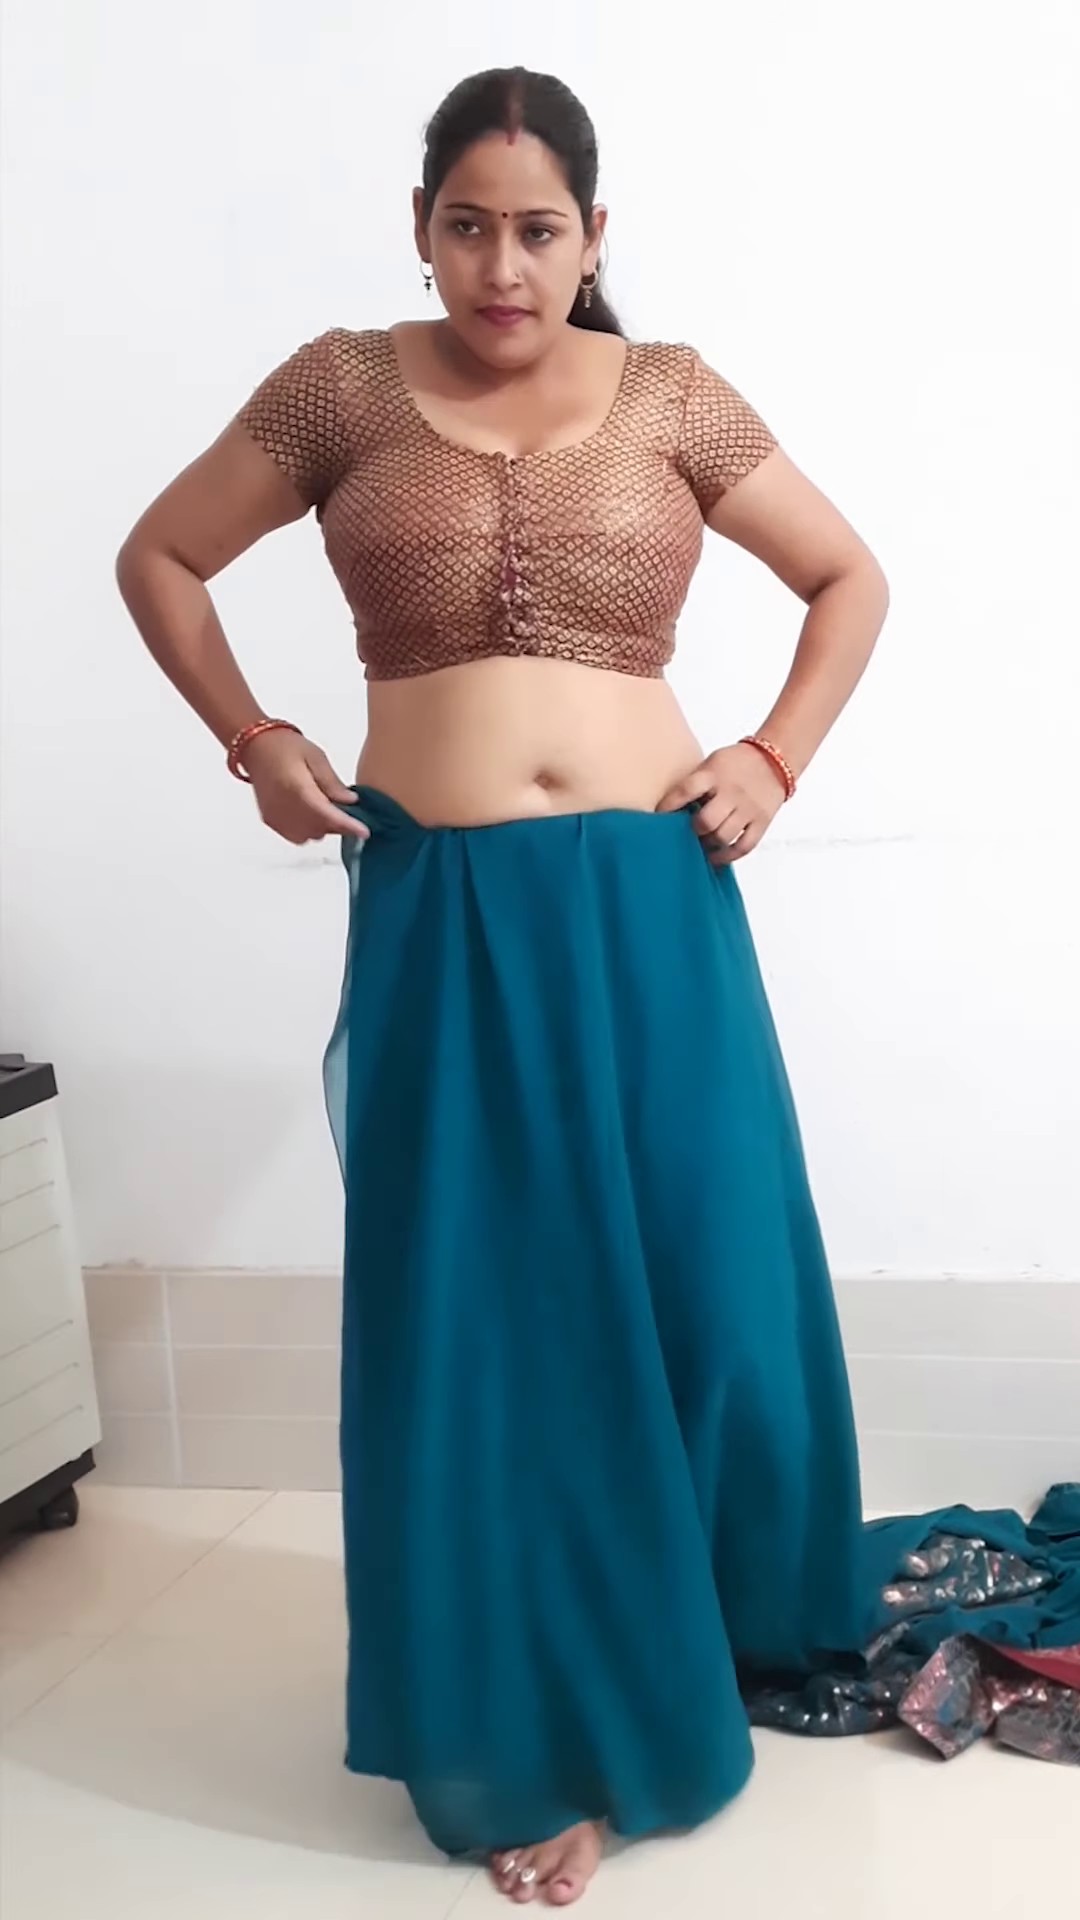 Desi bhabhi Uramila ki big boobs photos - Indian nude